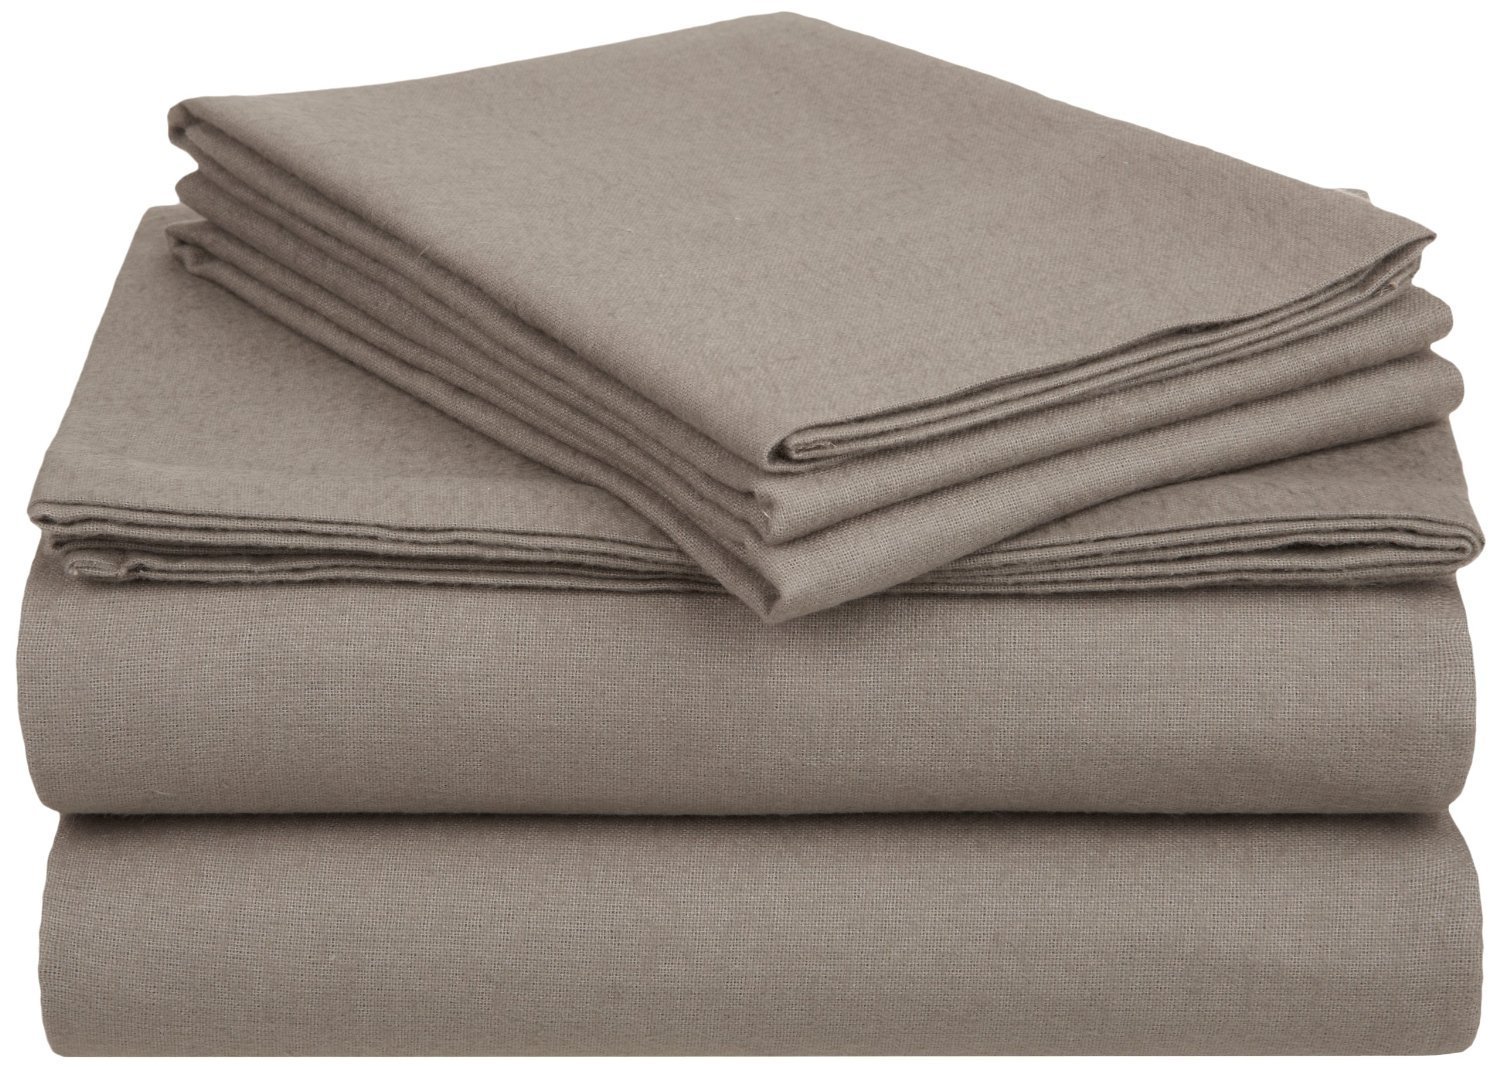 Luxury Paisley OR Plain Pattern 100% Cotton Flannel Sheet Set | eBay